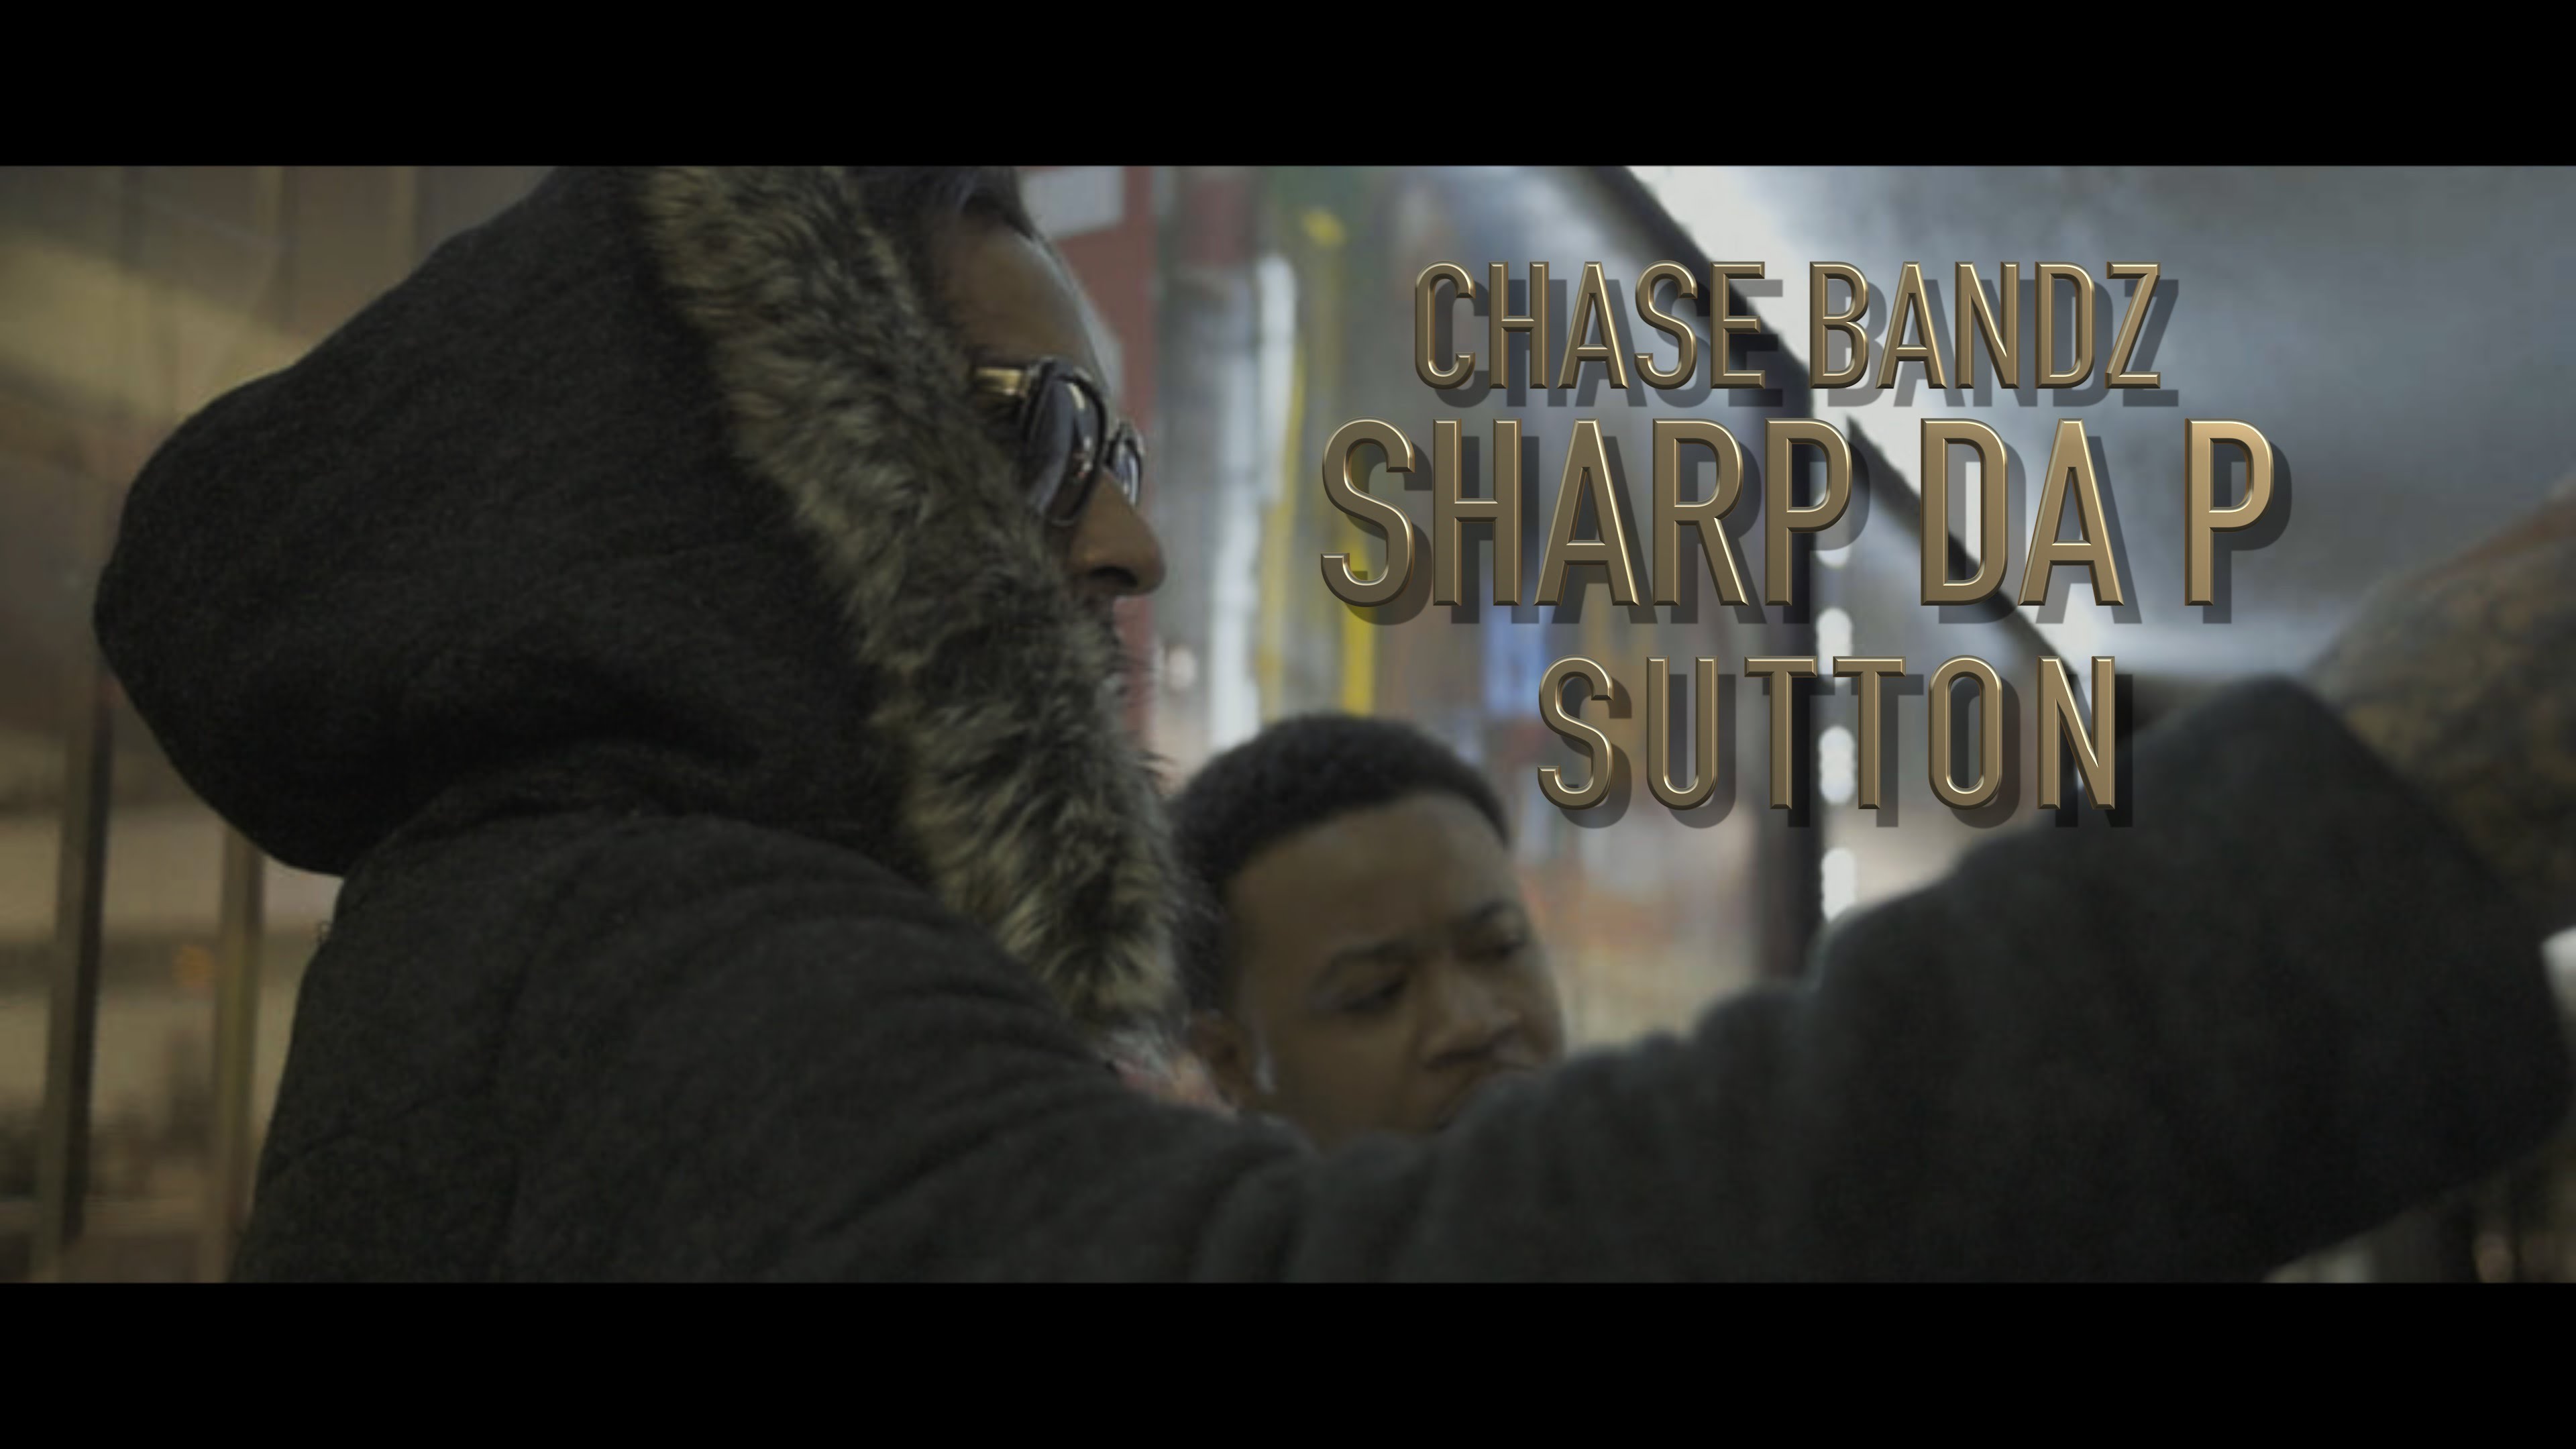 Sharp Da P Pockets Ft. Sutton & Chase Bandz